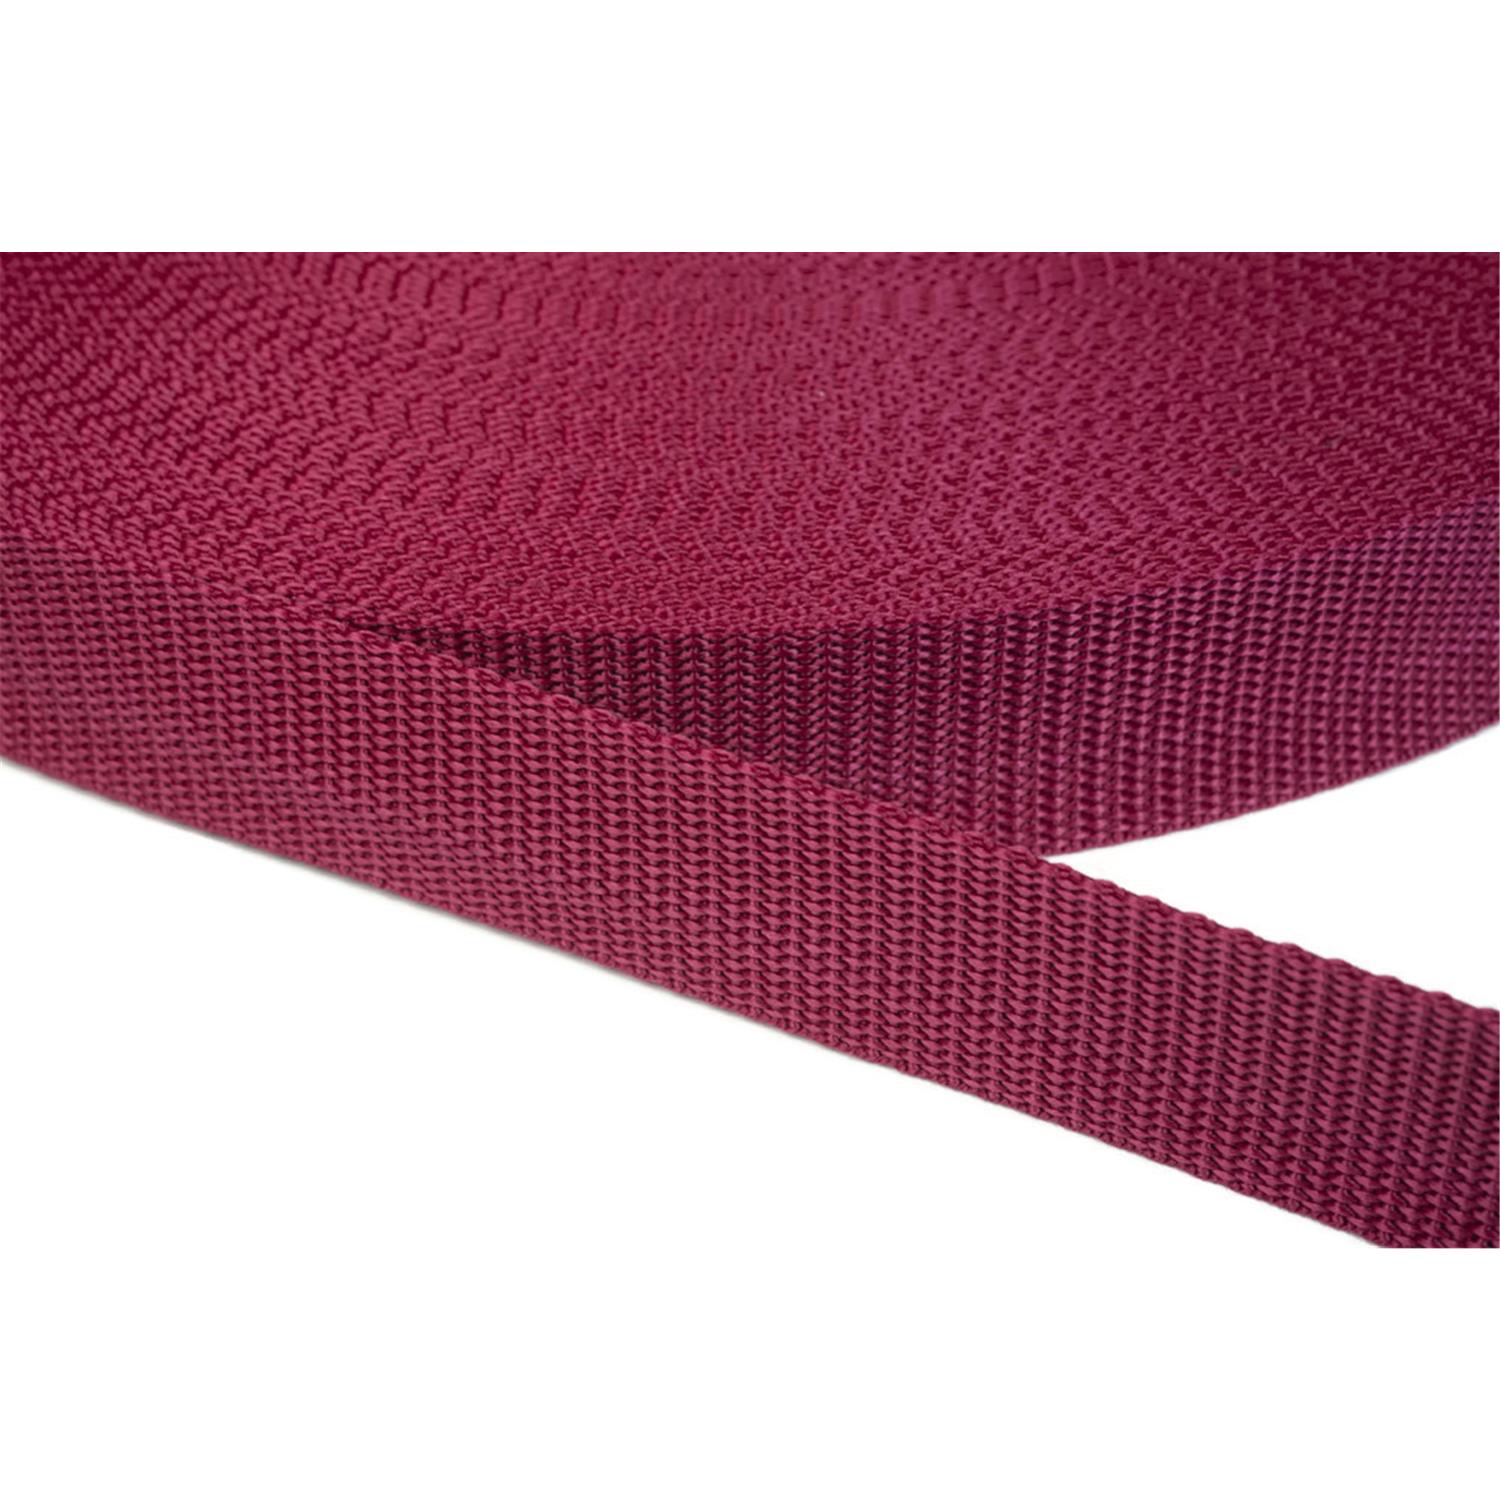 Gurtband 40mm breit aus Polypropylen in 41 Farben 21 - dunkelrot 12 Meter